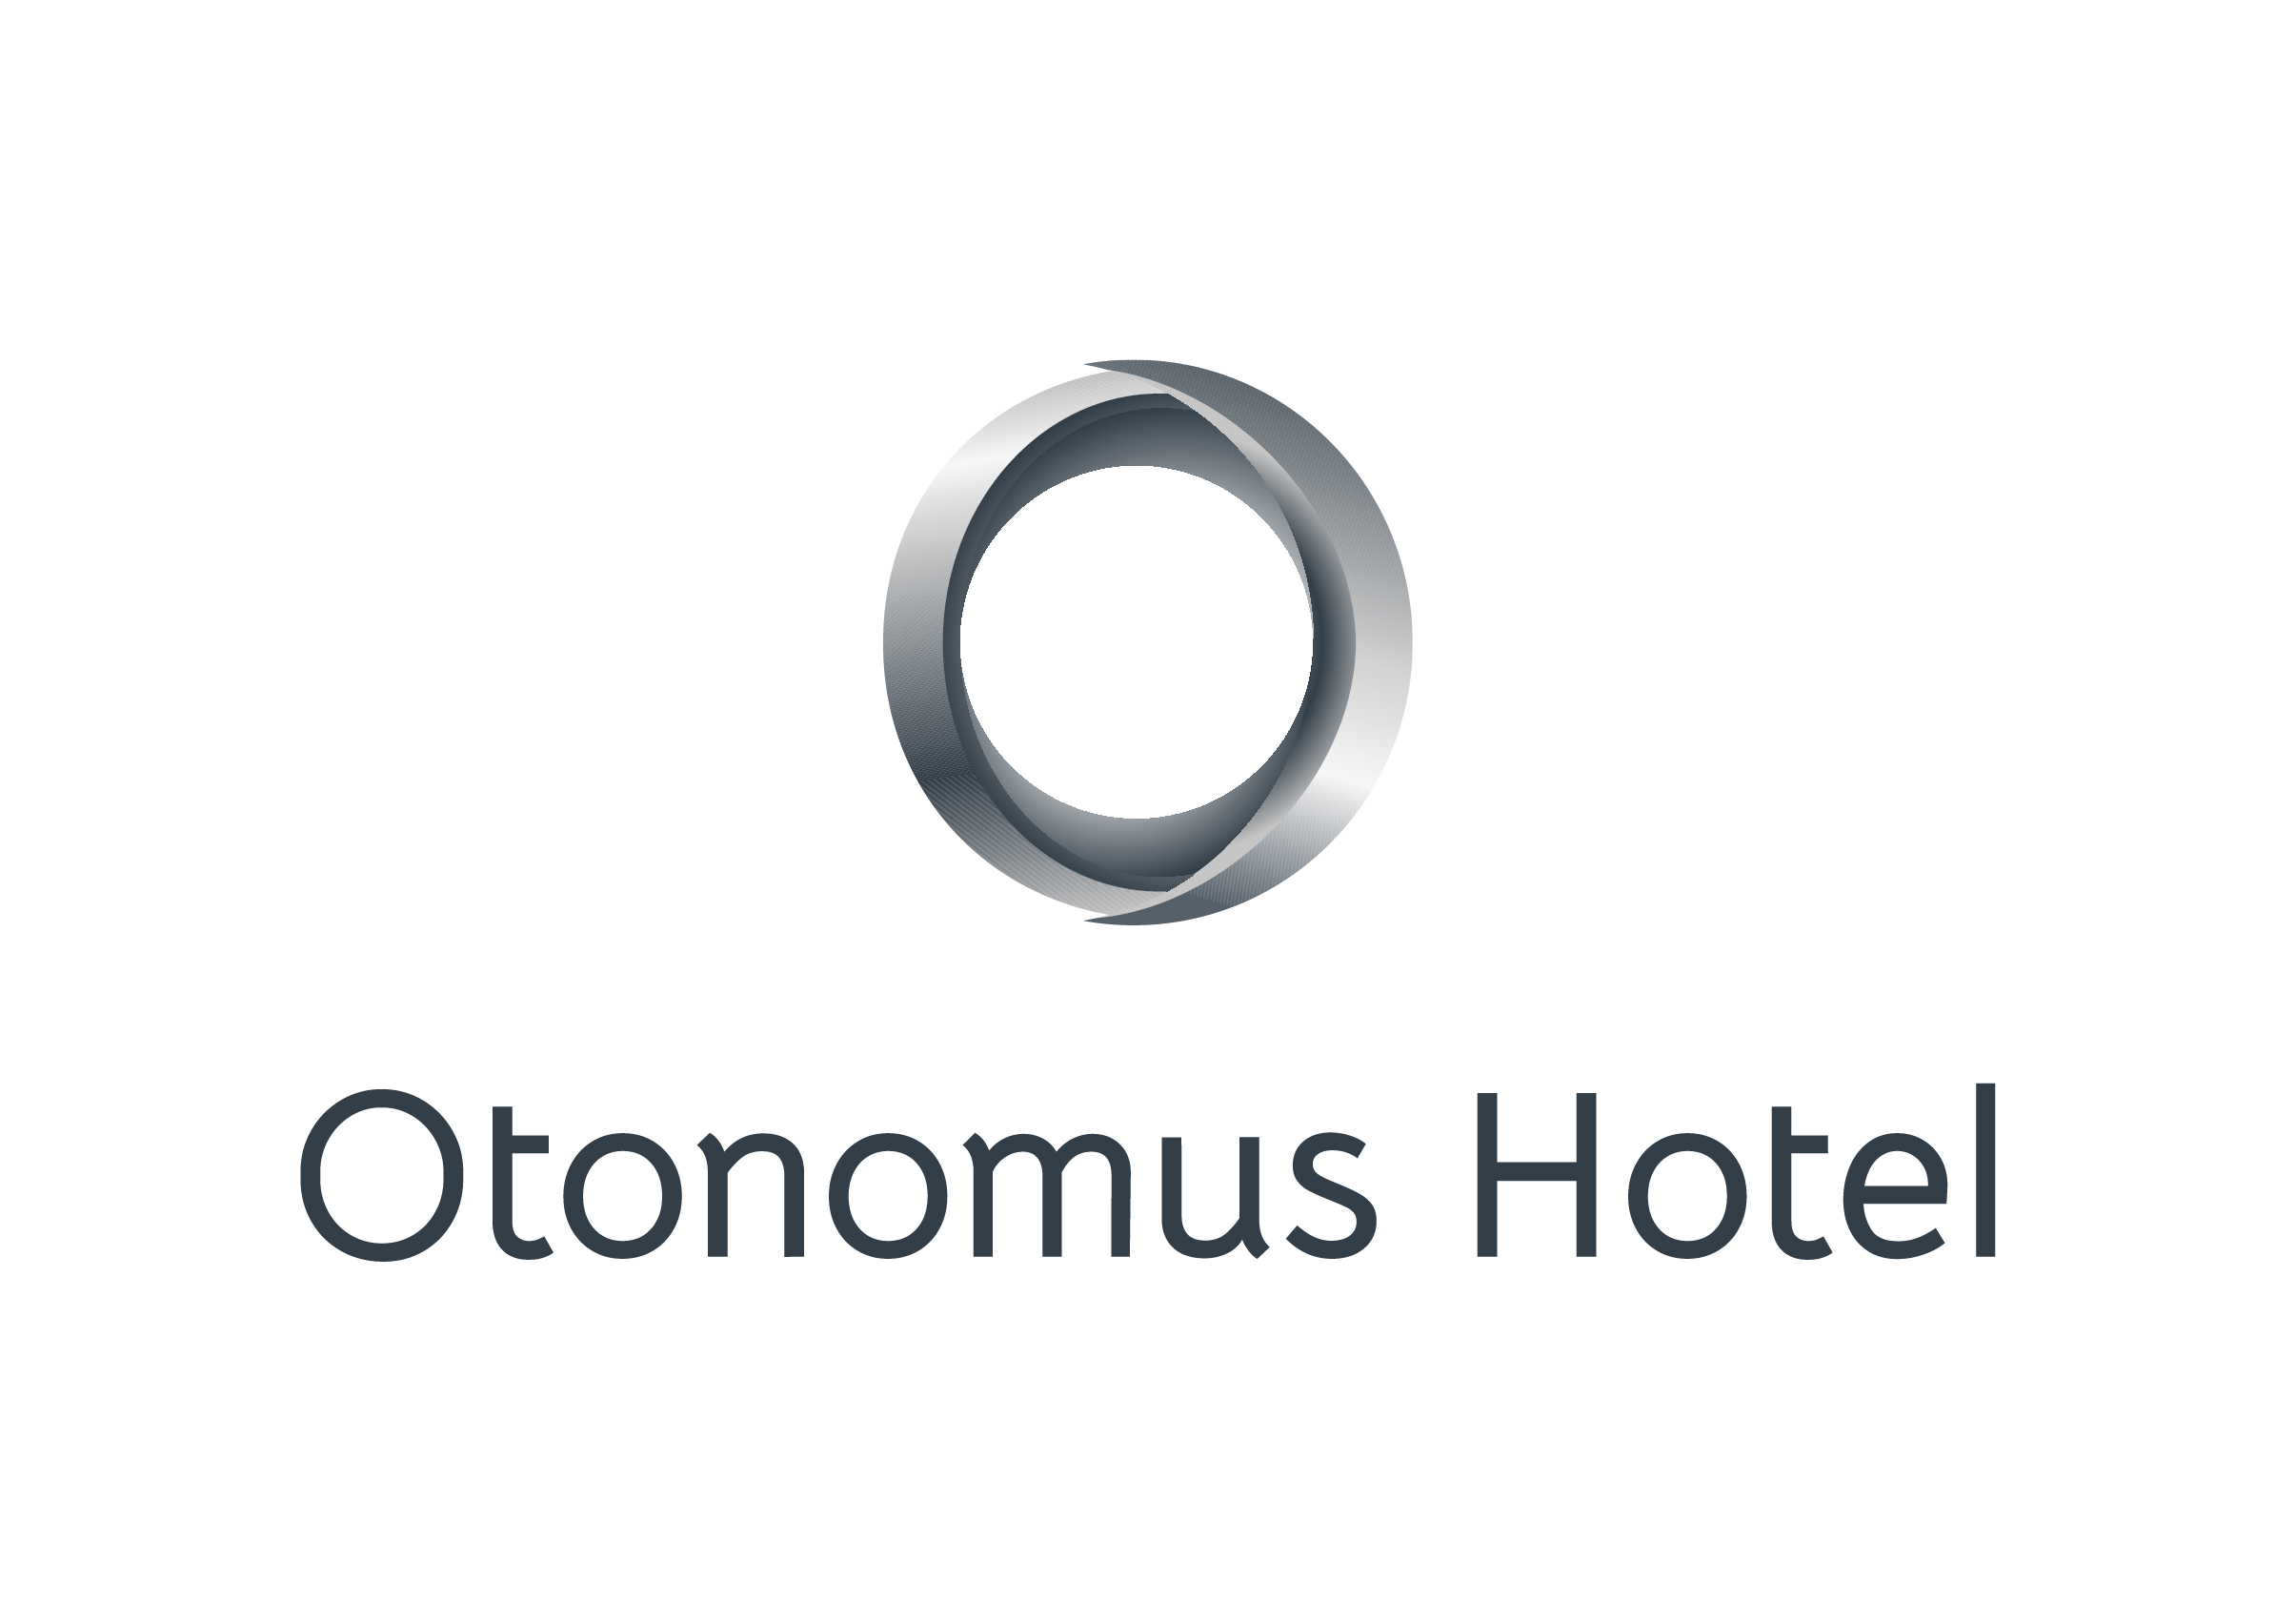 Otonomus hotels